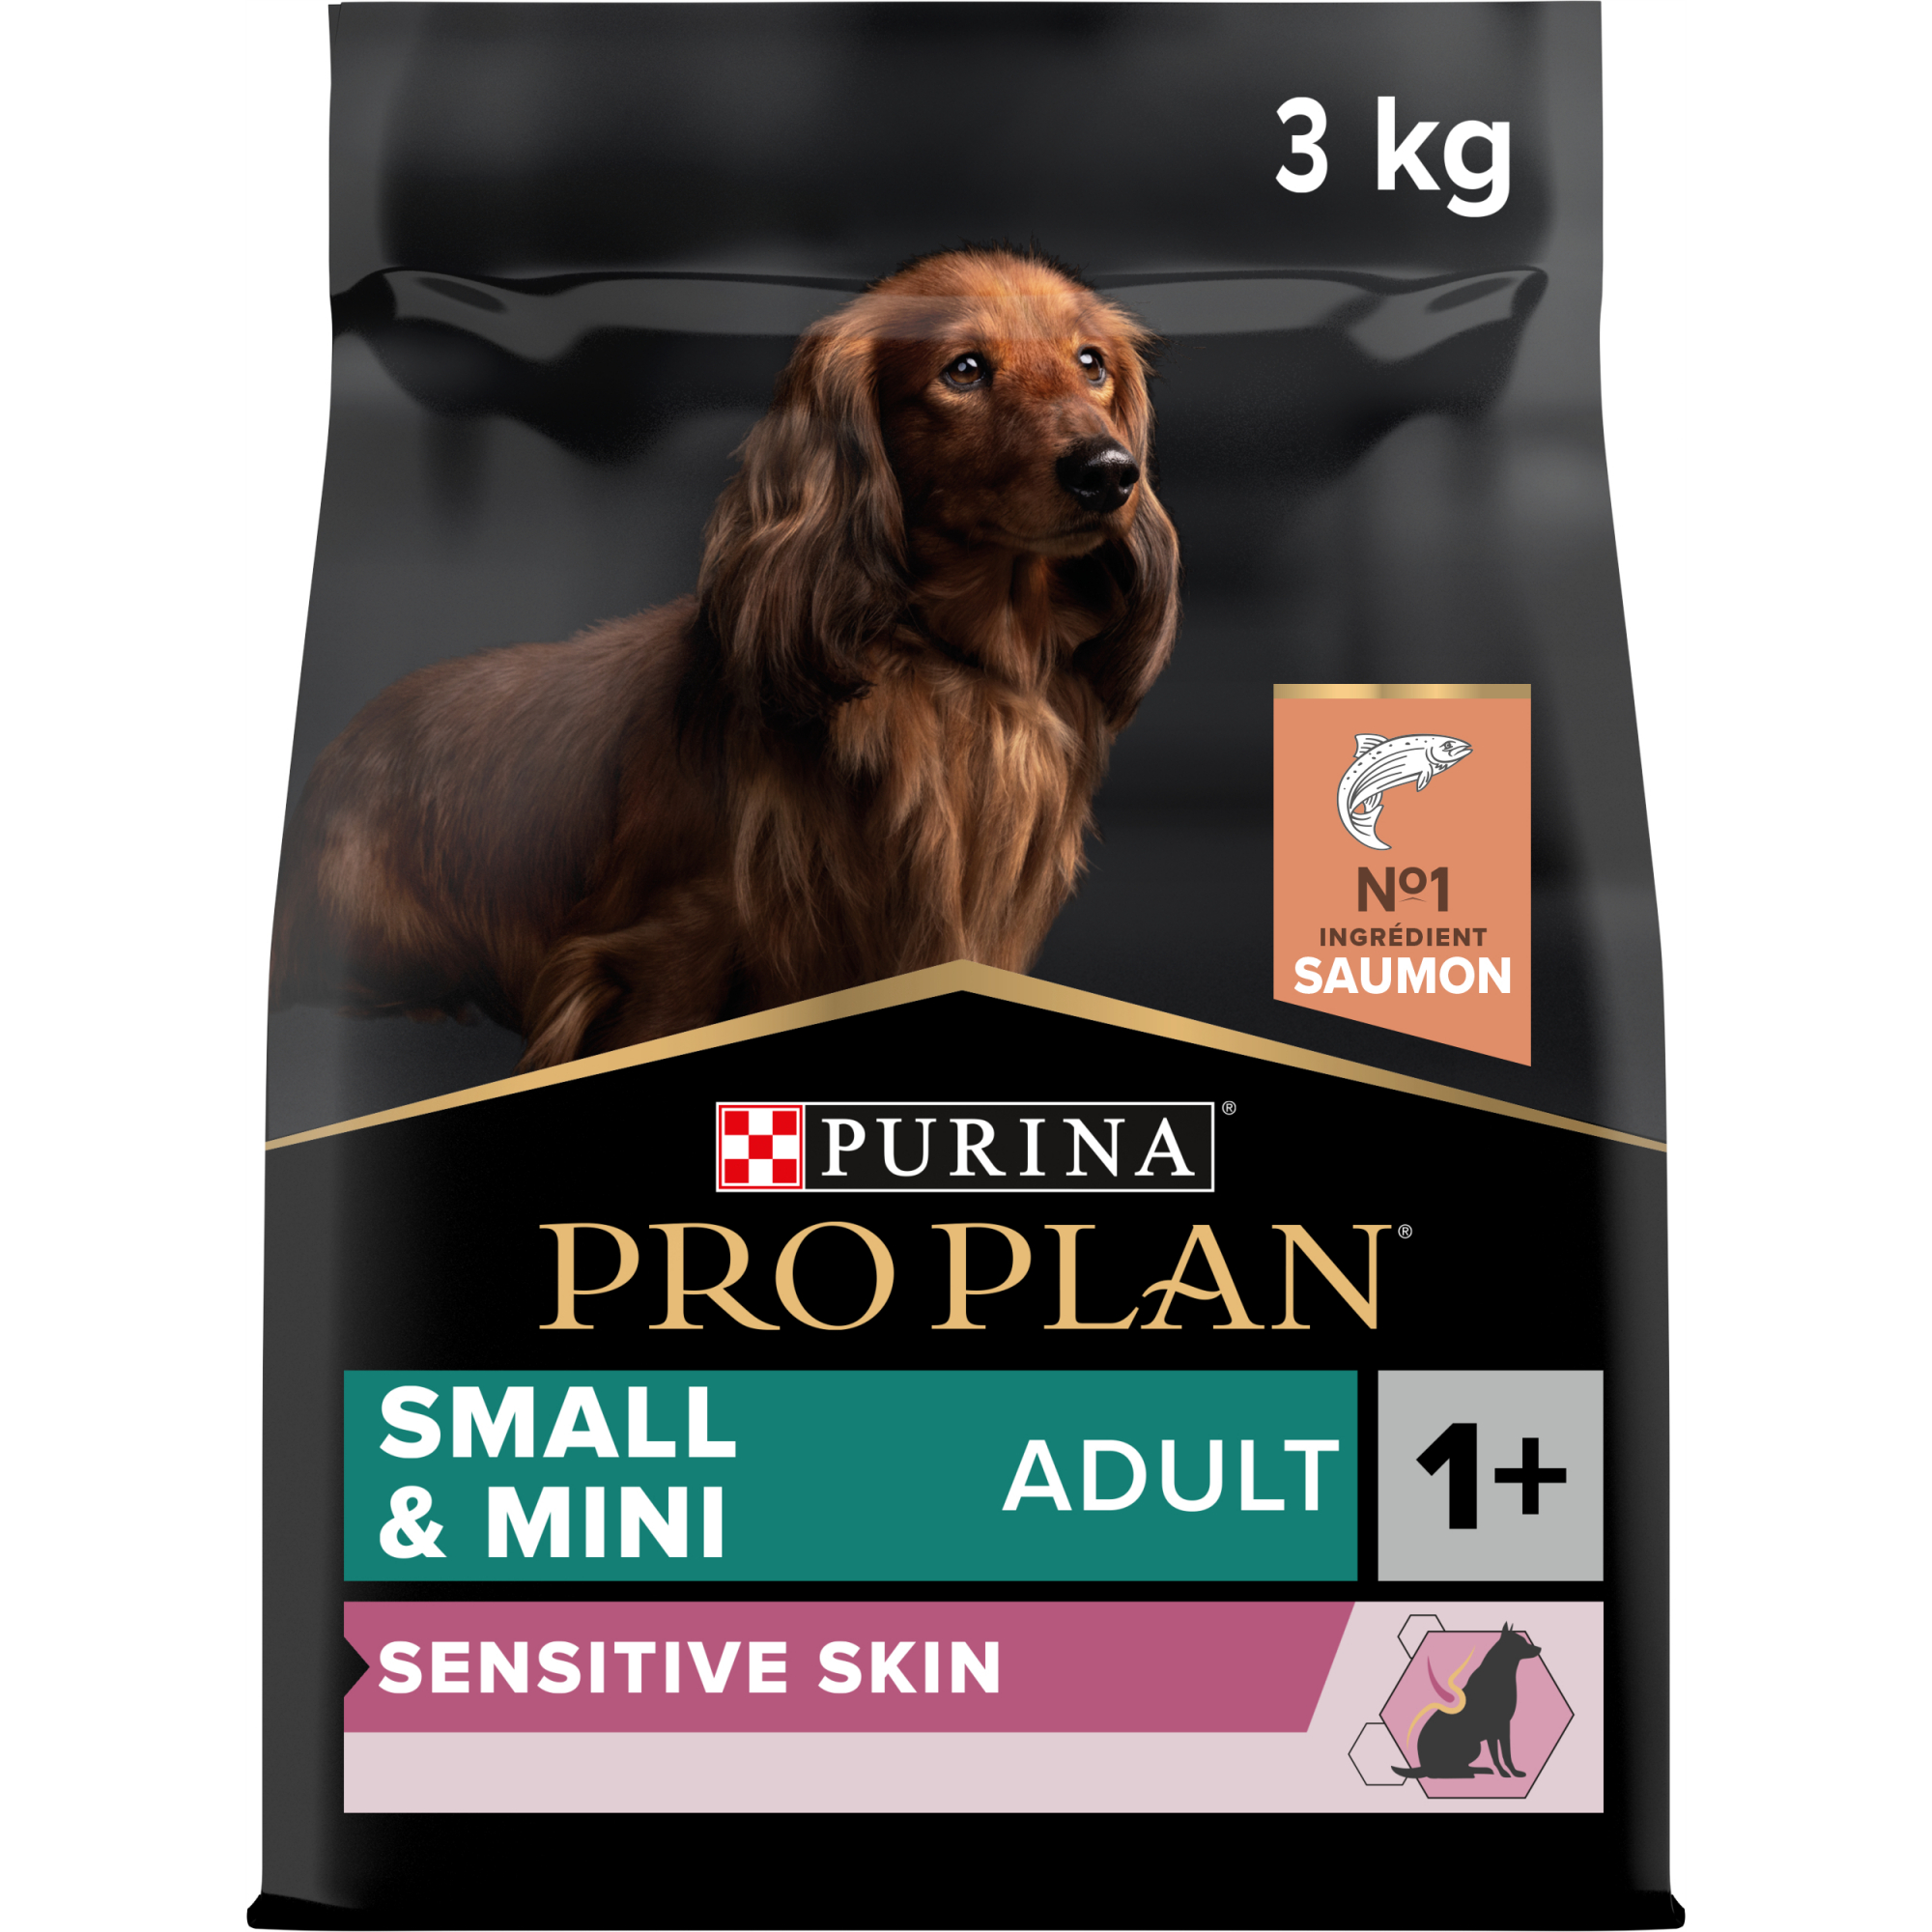 PRO PLAN Small & Mini Adult Sensitive Skin für Hunde